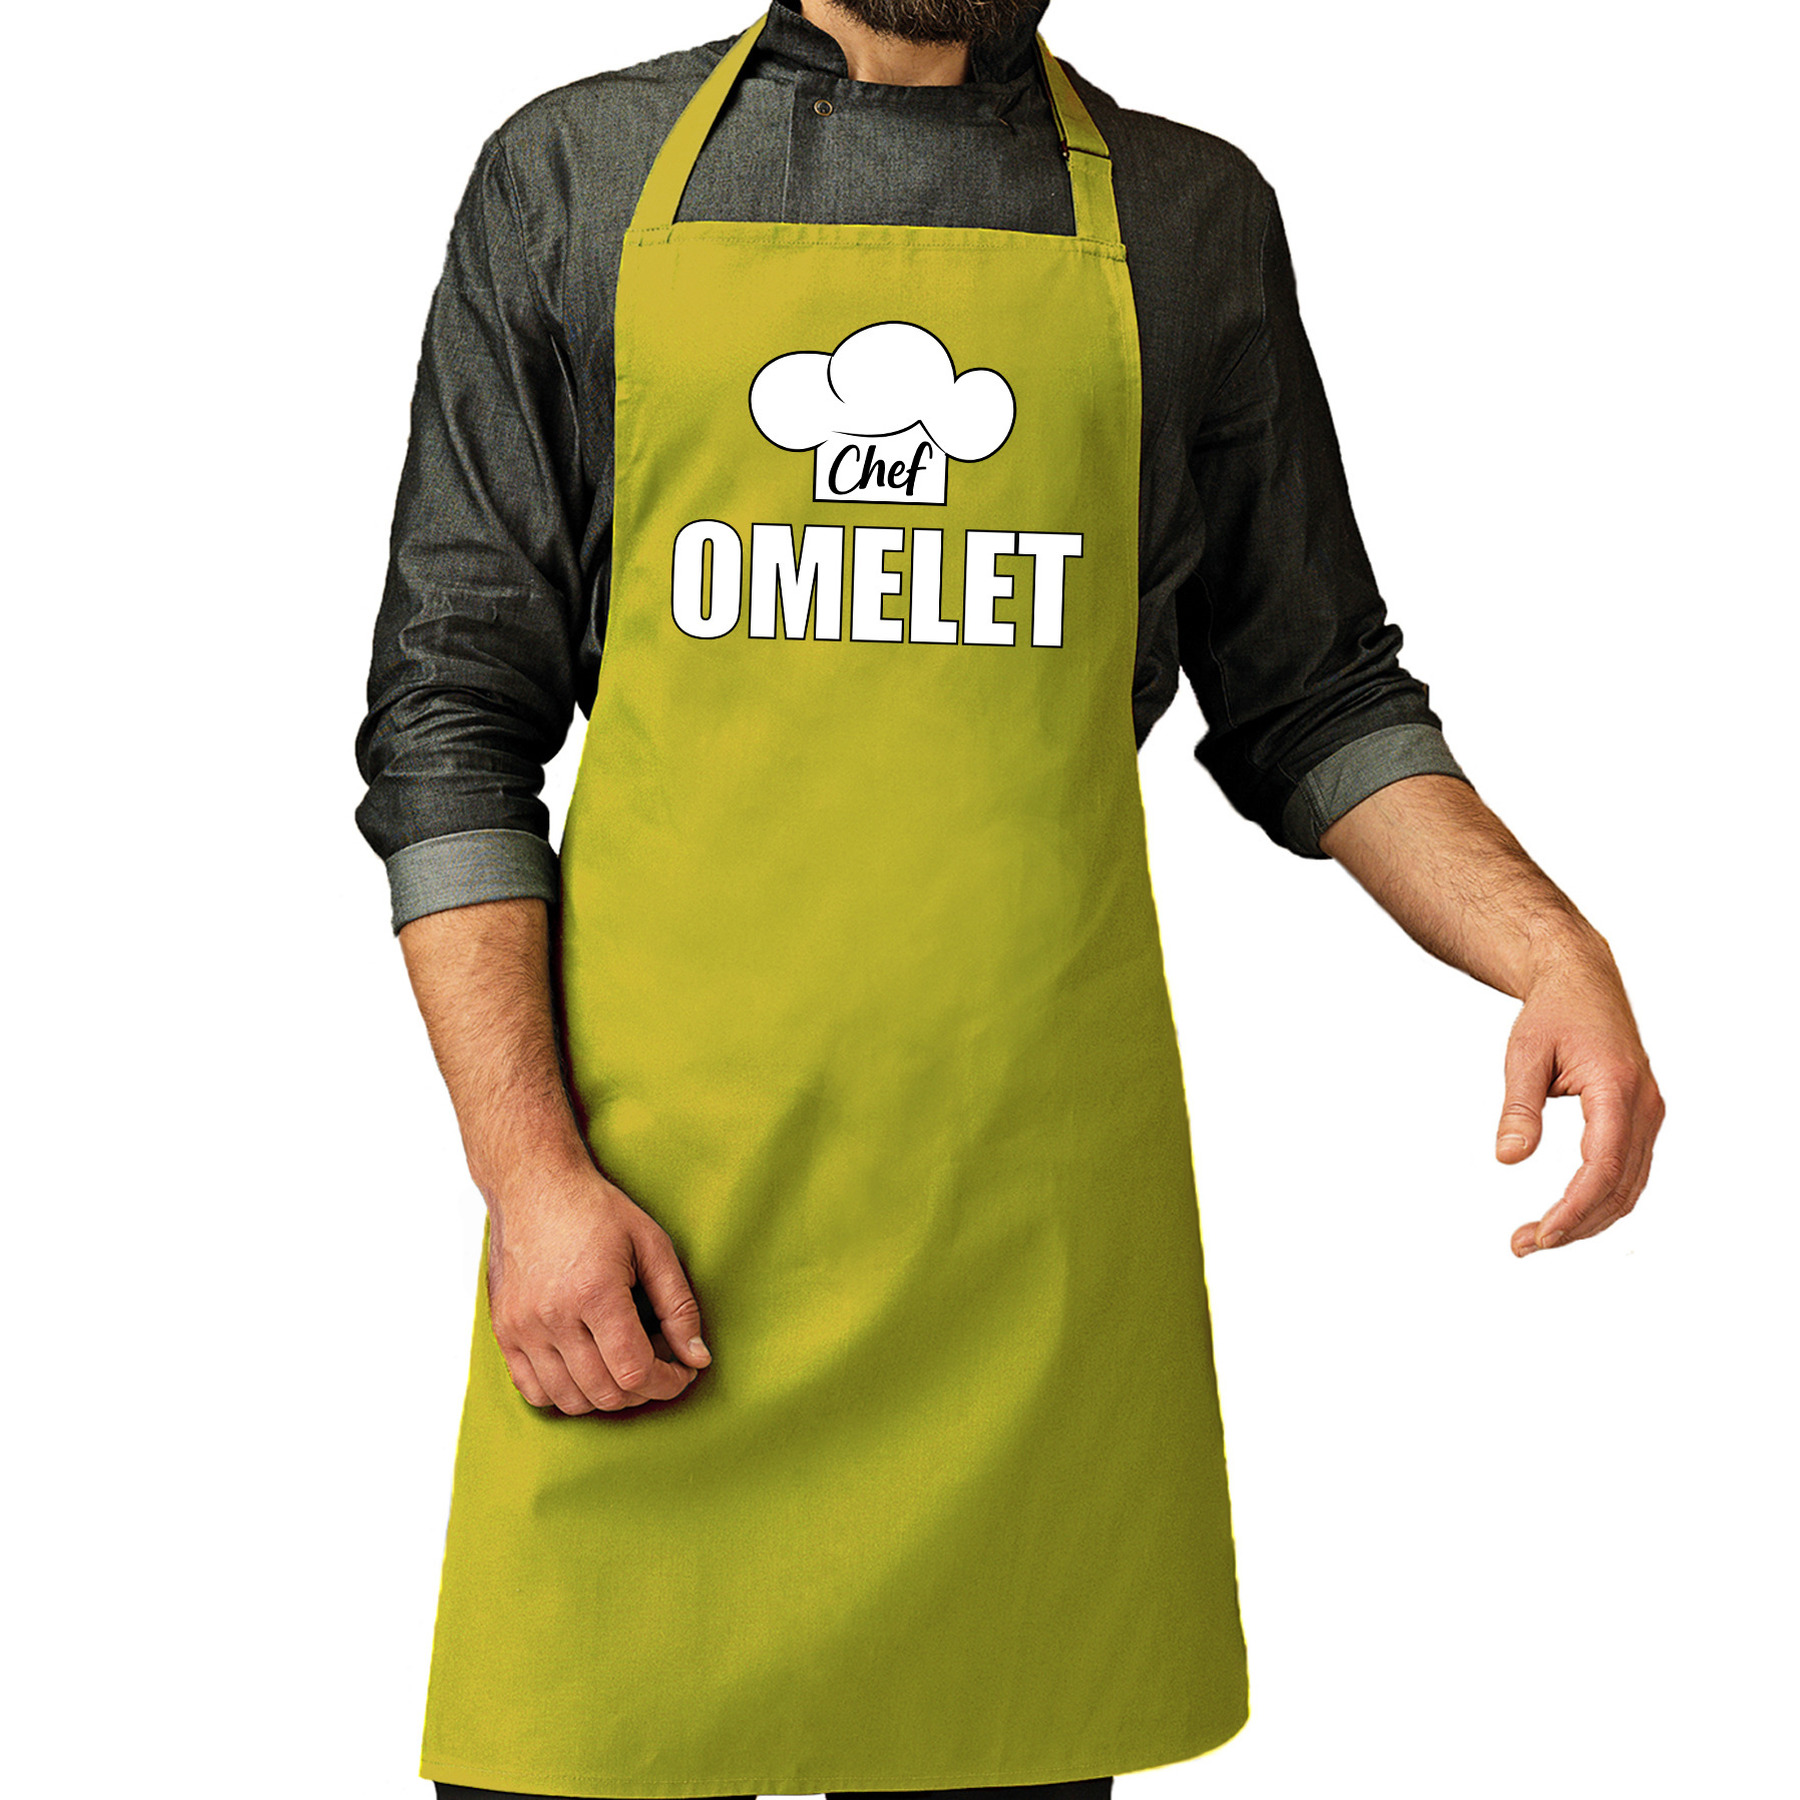 Chef omelet schort - keukenschort lime groen heren